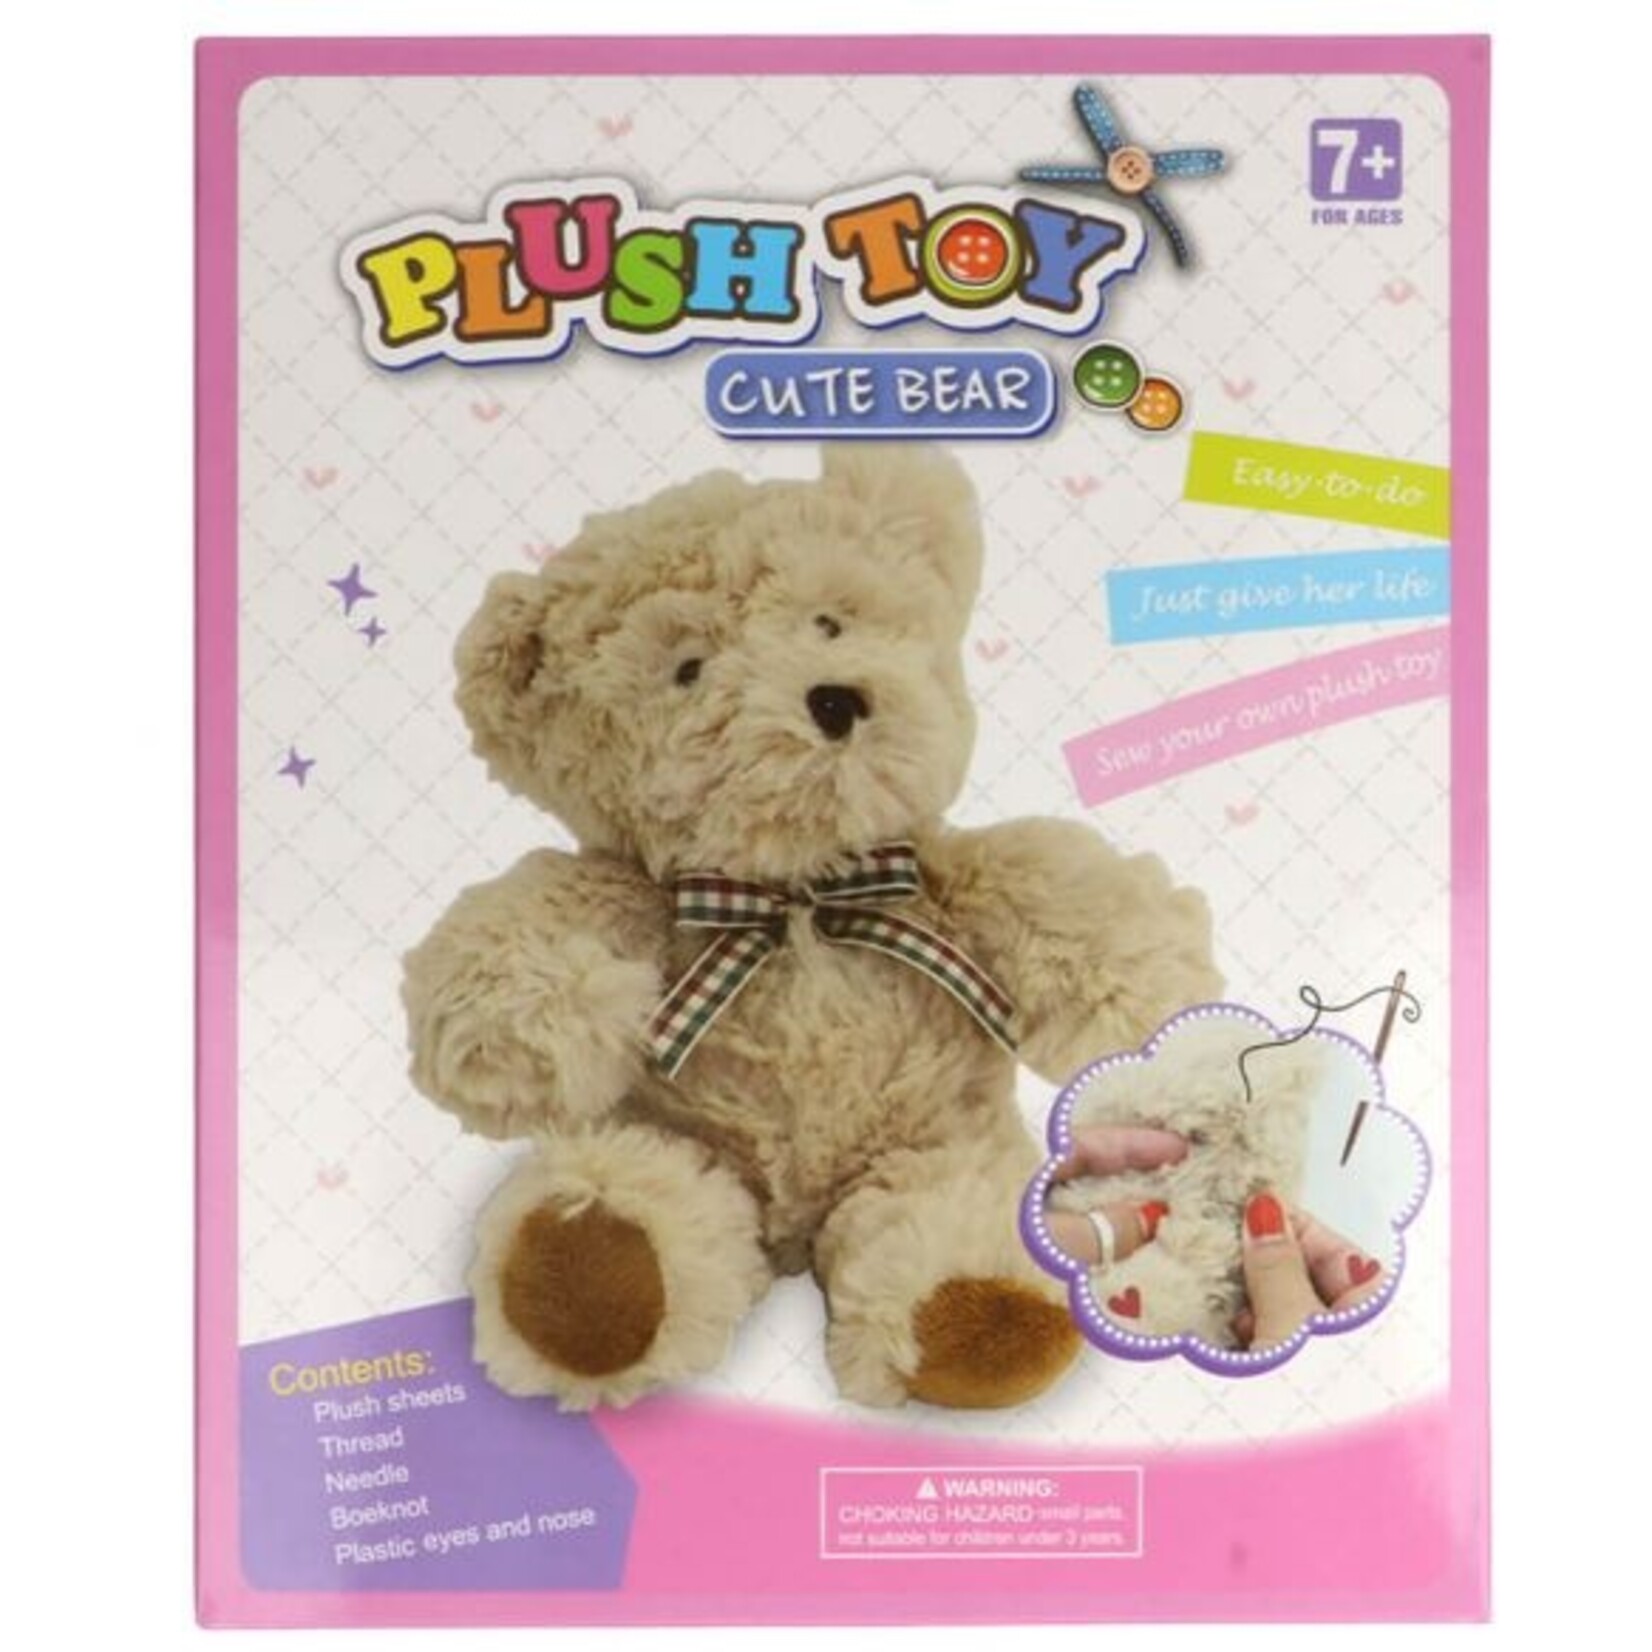 De Bond plush toy cute bear